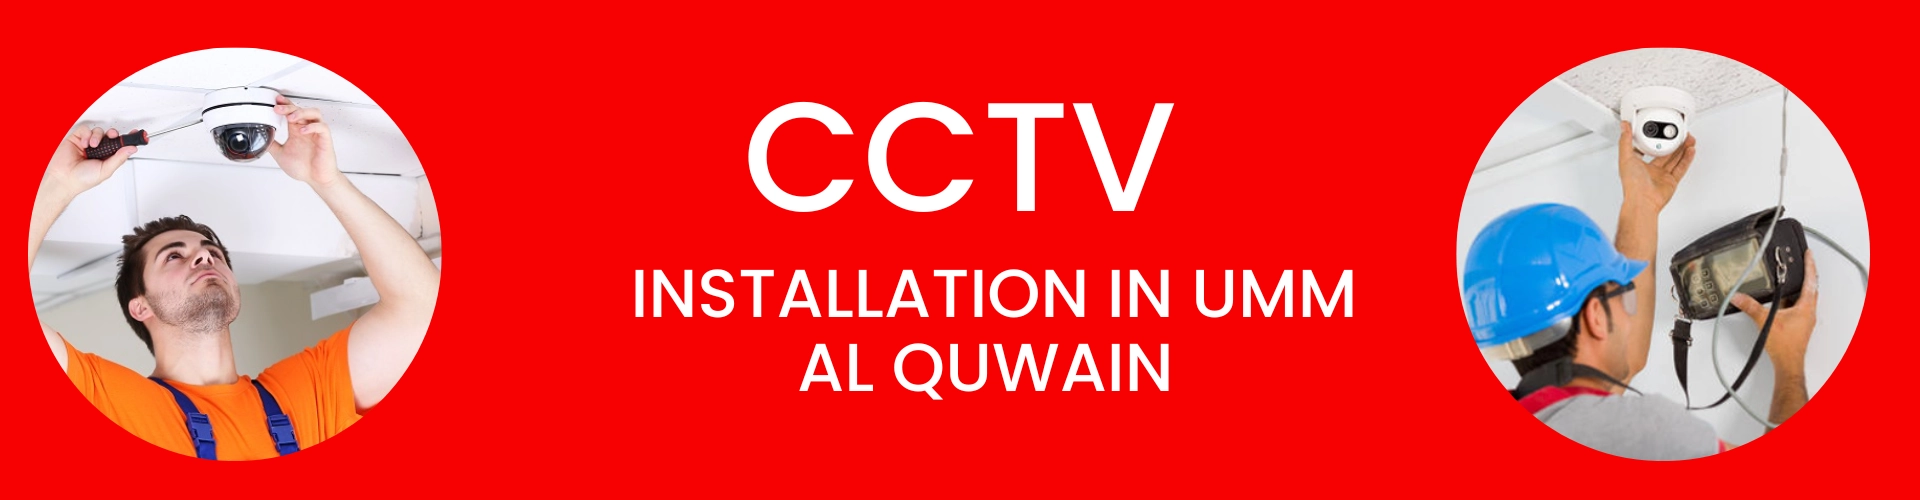 CCTV installation company in UMM AL QUWAIN